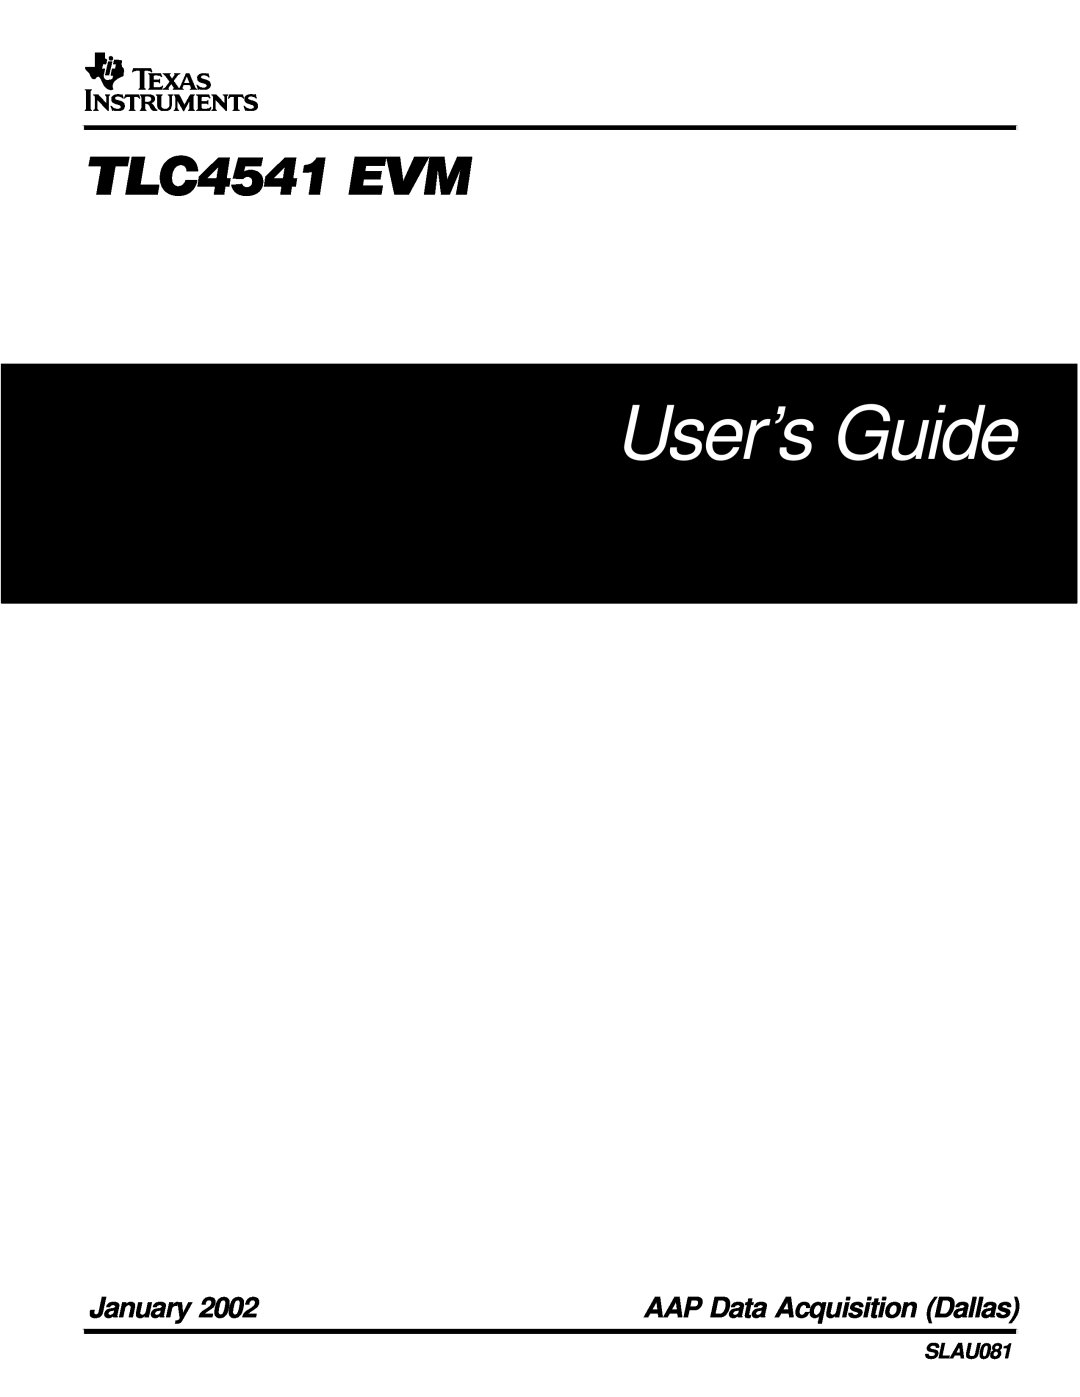 Texas Instruments SLAU081 manual User’s Guide, TLC4541 EVM, January, AAP Data Acquisition Dallas 